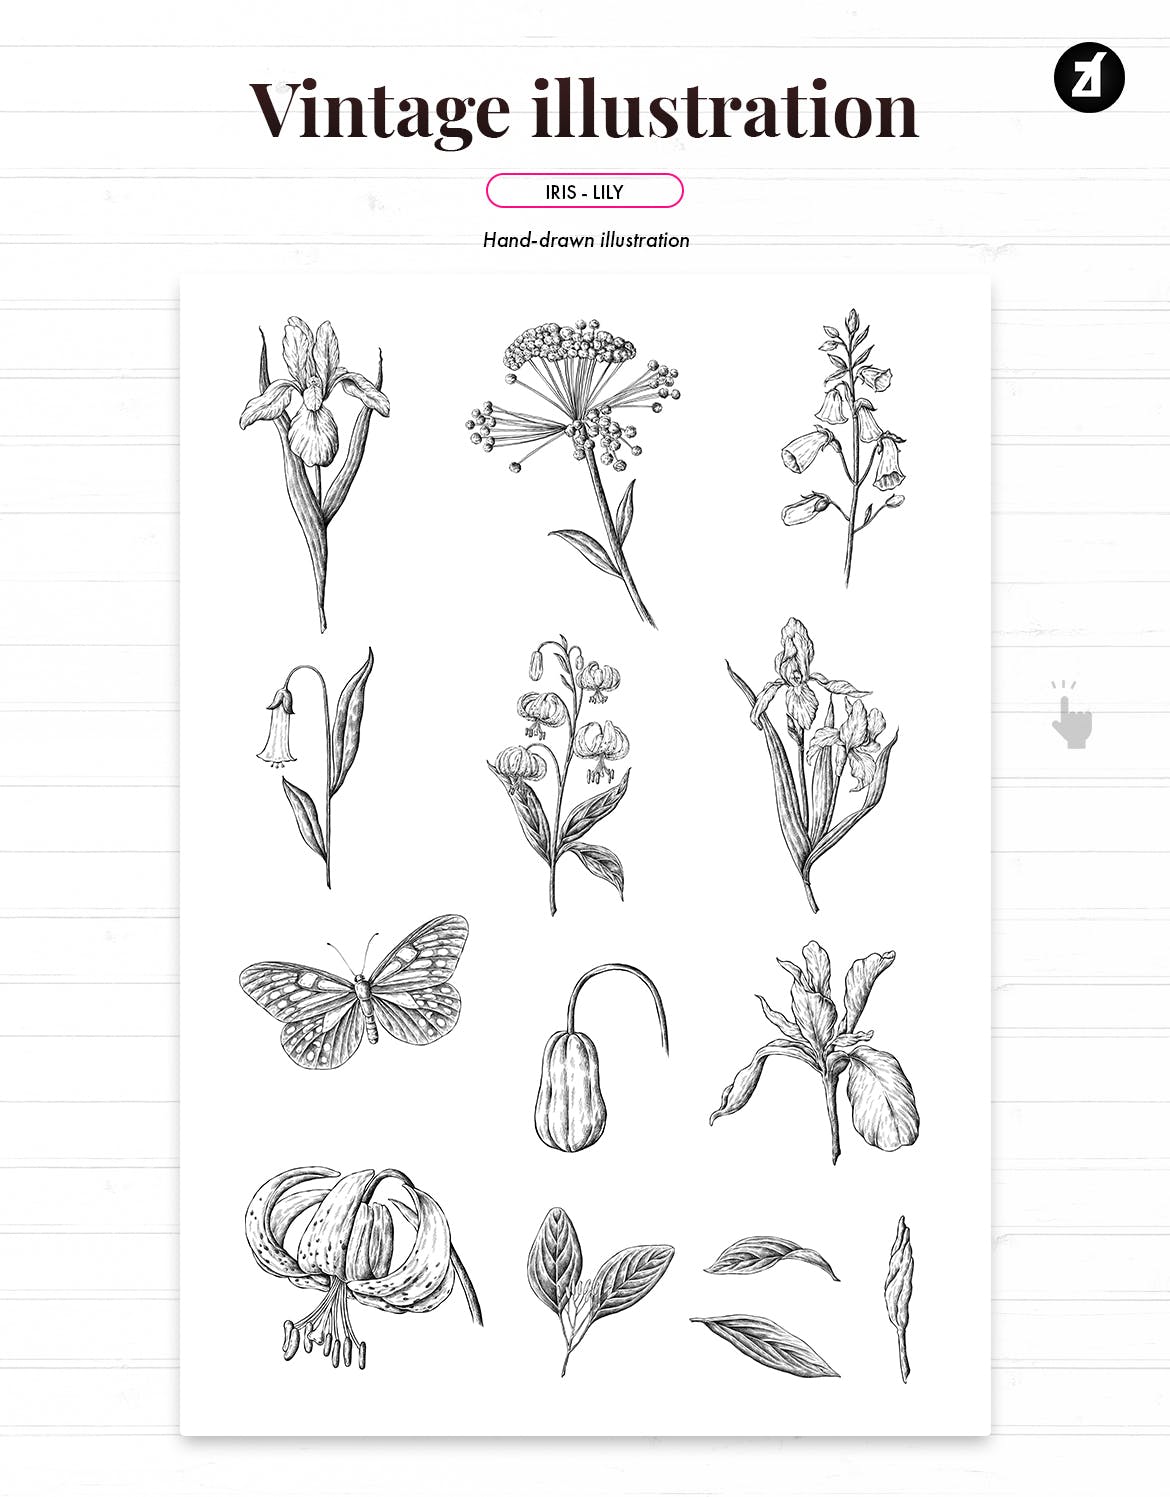 鸢尾花&百合复古插画和图案 Iris and lily vintage illustration and pattern 图片素材 第4张